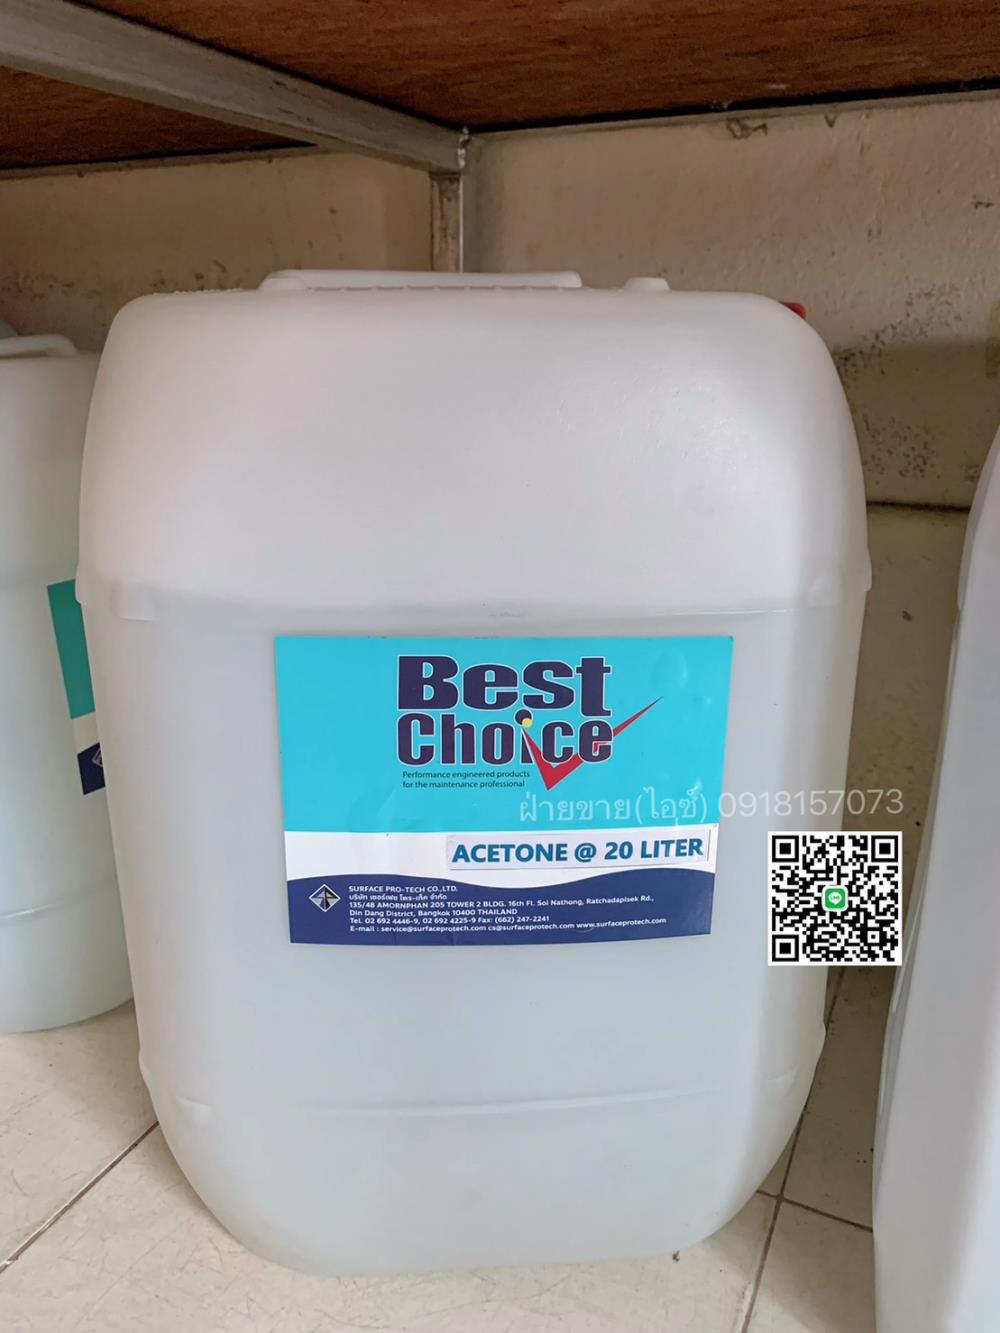 Best Choice Acetone อะซิโทน ใช้ล้างทำความสะอาดได้-ติดต่อฝ่ายขาย(ไอซ์)0918157073ค่ะ,Best Choice Acetone,Acetone, อะซิโตน, อาซีโทน, น้ำยาอะซิโตน, น้ำยาล้างเครื่ีองมือ, ล้างคราบอีพ๊อกซี่, ล้างคราบสี, ล้างอุปกรณ์ทาสีด้วยอะซิโตน,  อะซิโตน ทําความสะอาด, น้ำยา อะซิโตน,BestChoice,Chemicals/Removers and Solvents